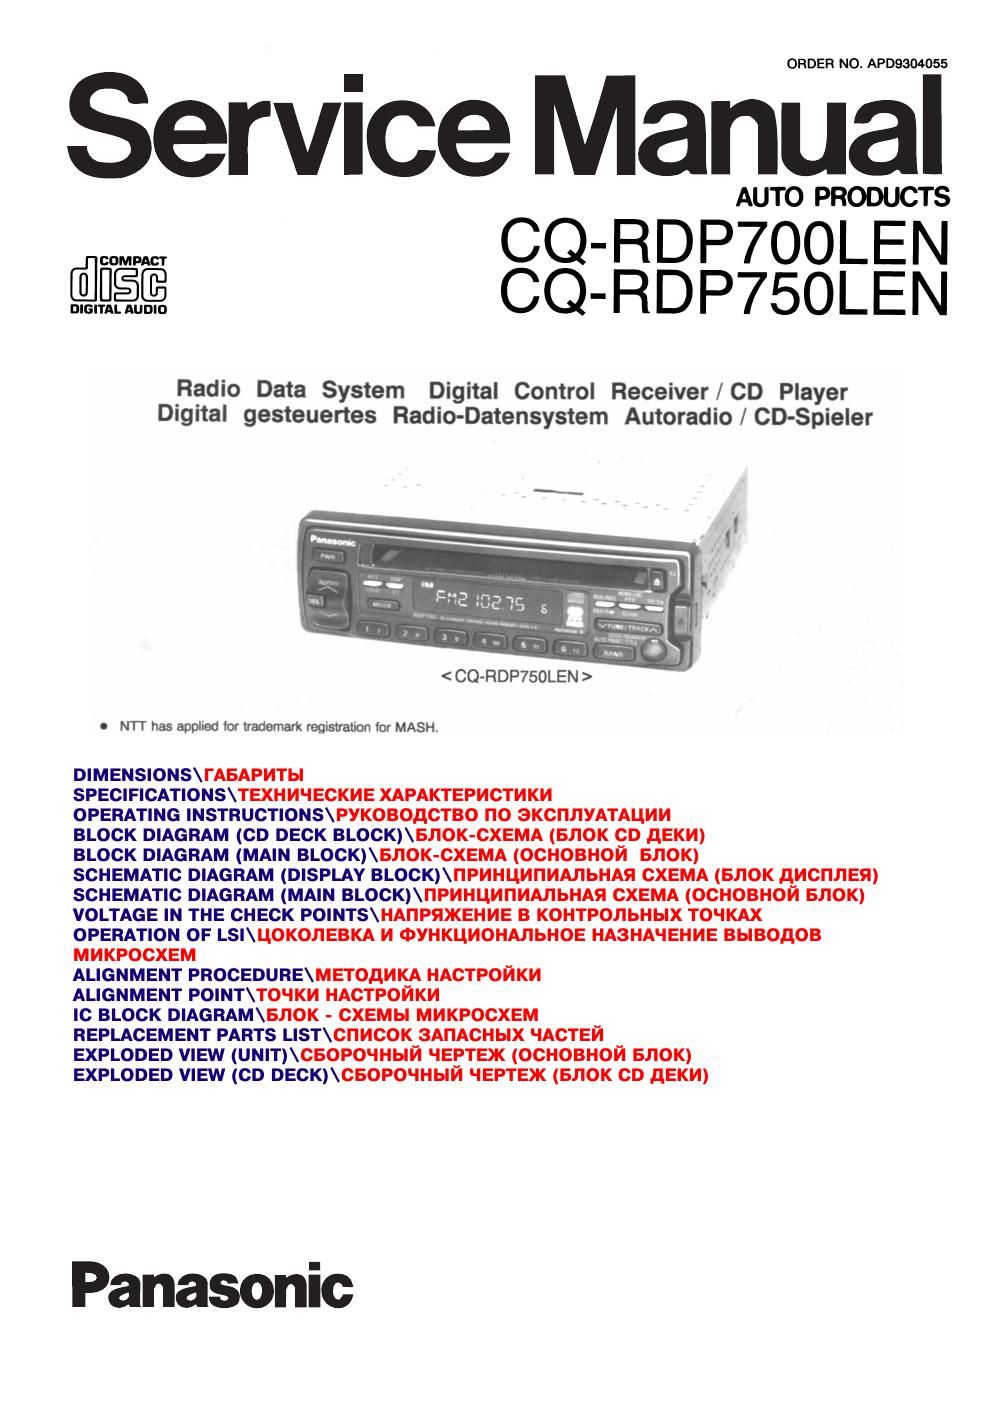 panasonic cq rdp 700 len service manual